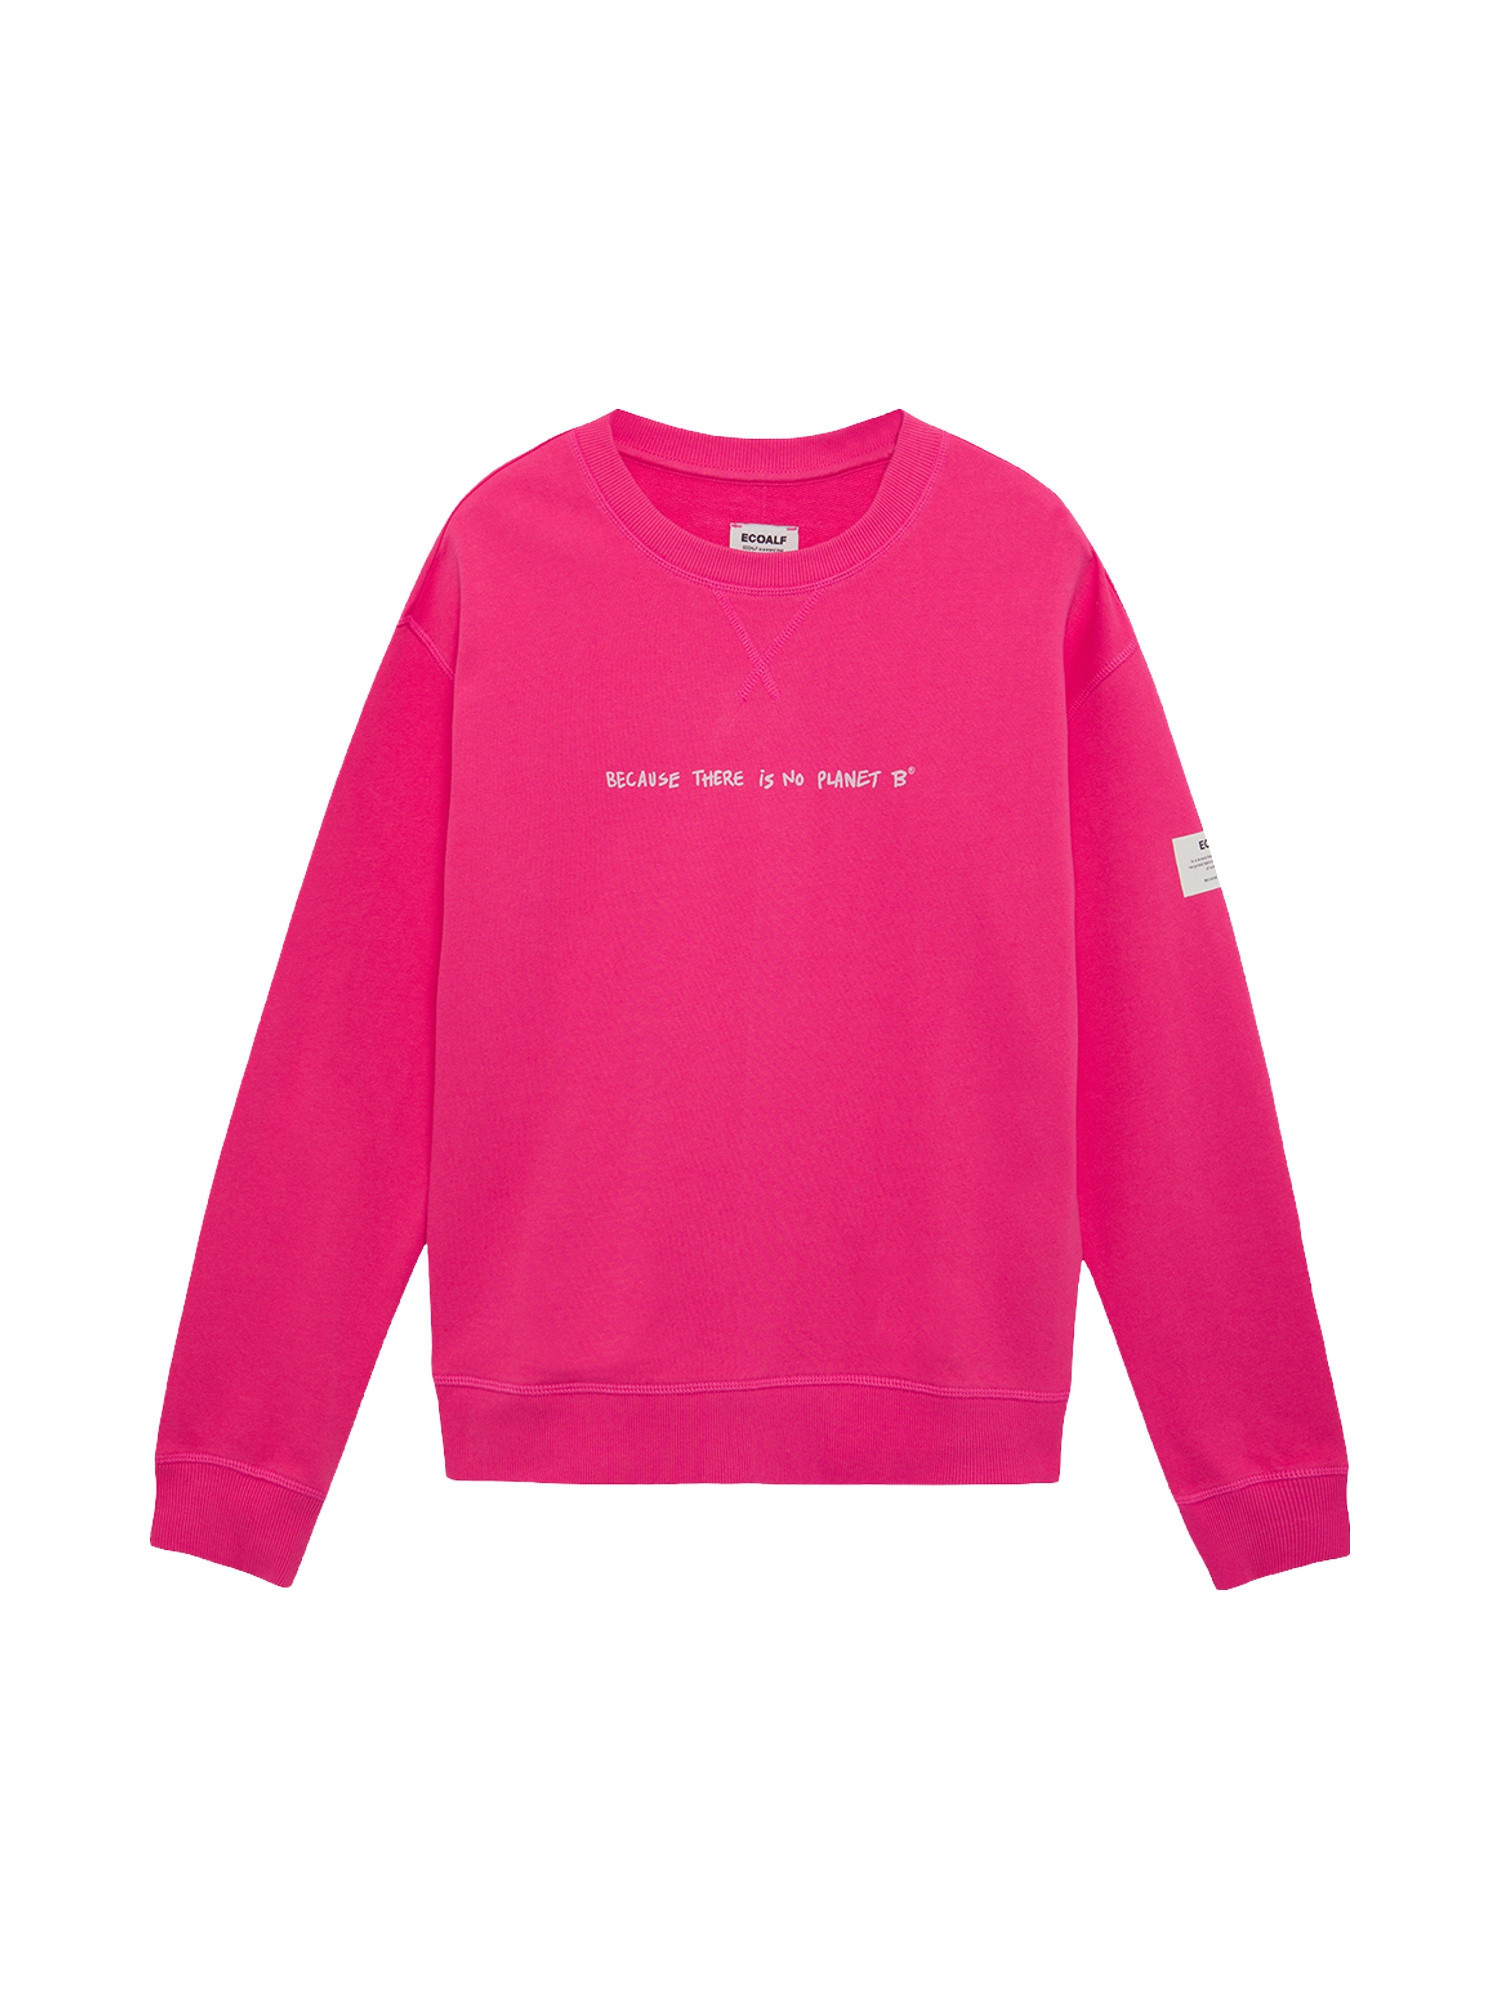 Ecoalf - Cagliari sweatshirt with writing, Dark Pink, large image number 0